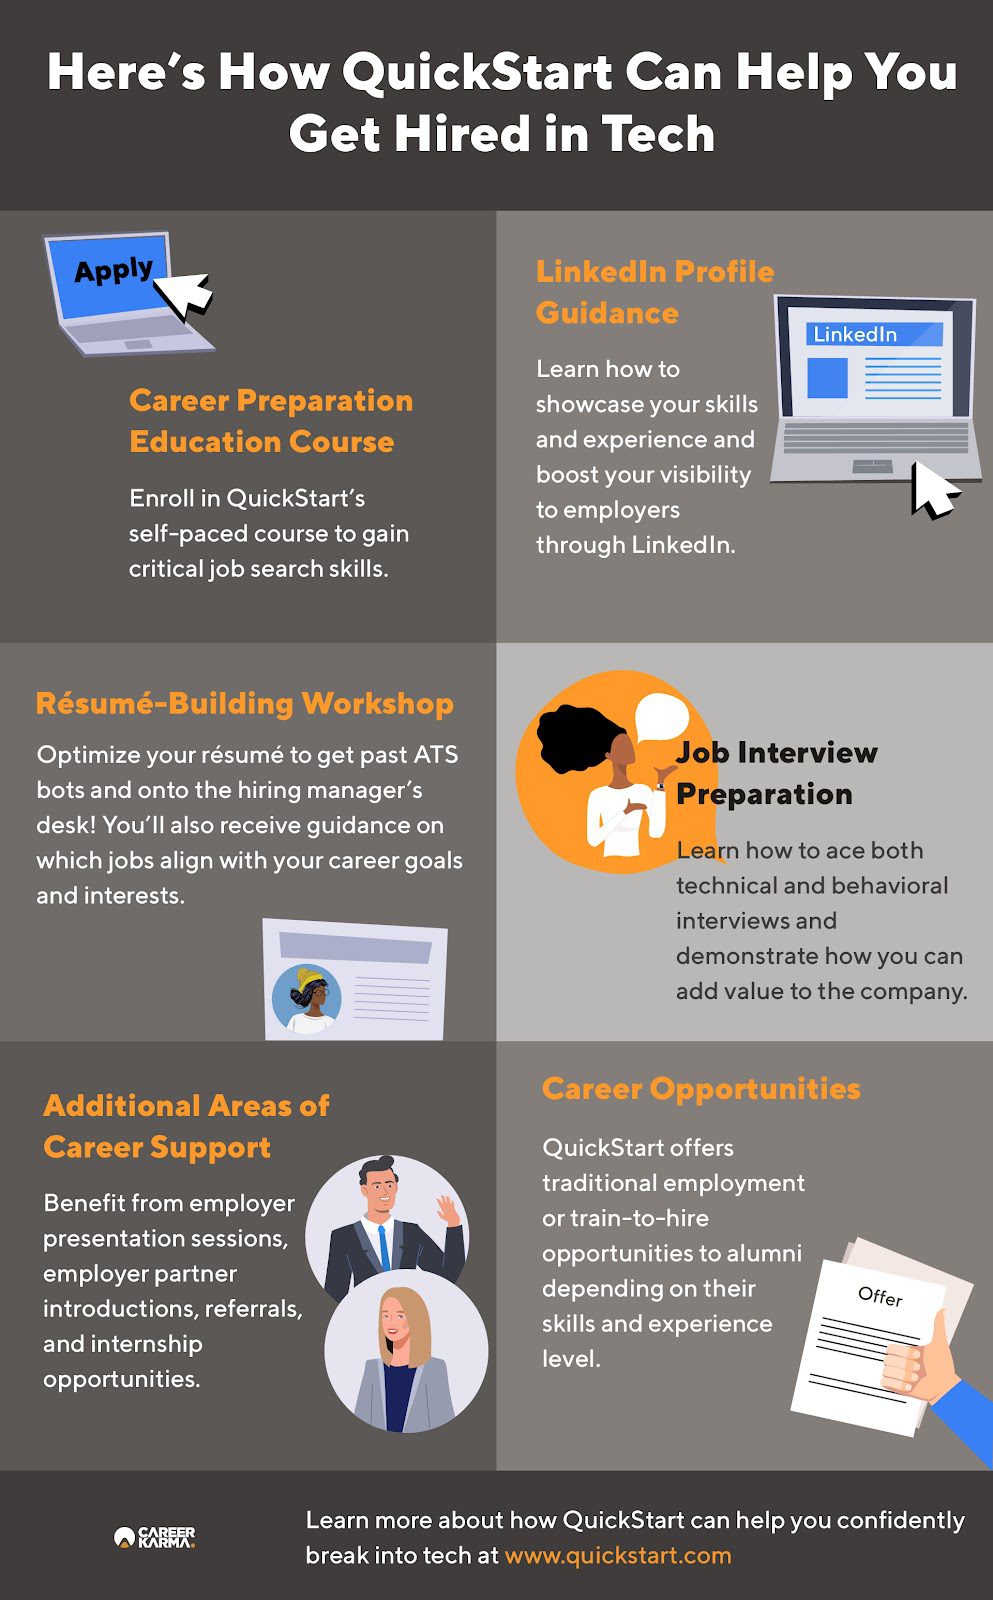 An infographic highlighting QuickStart’s career services